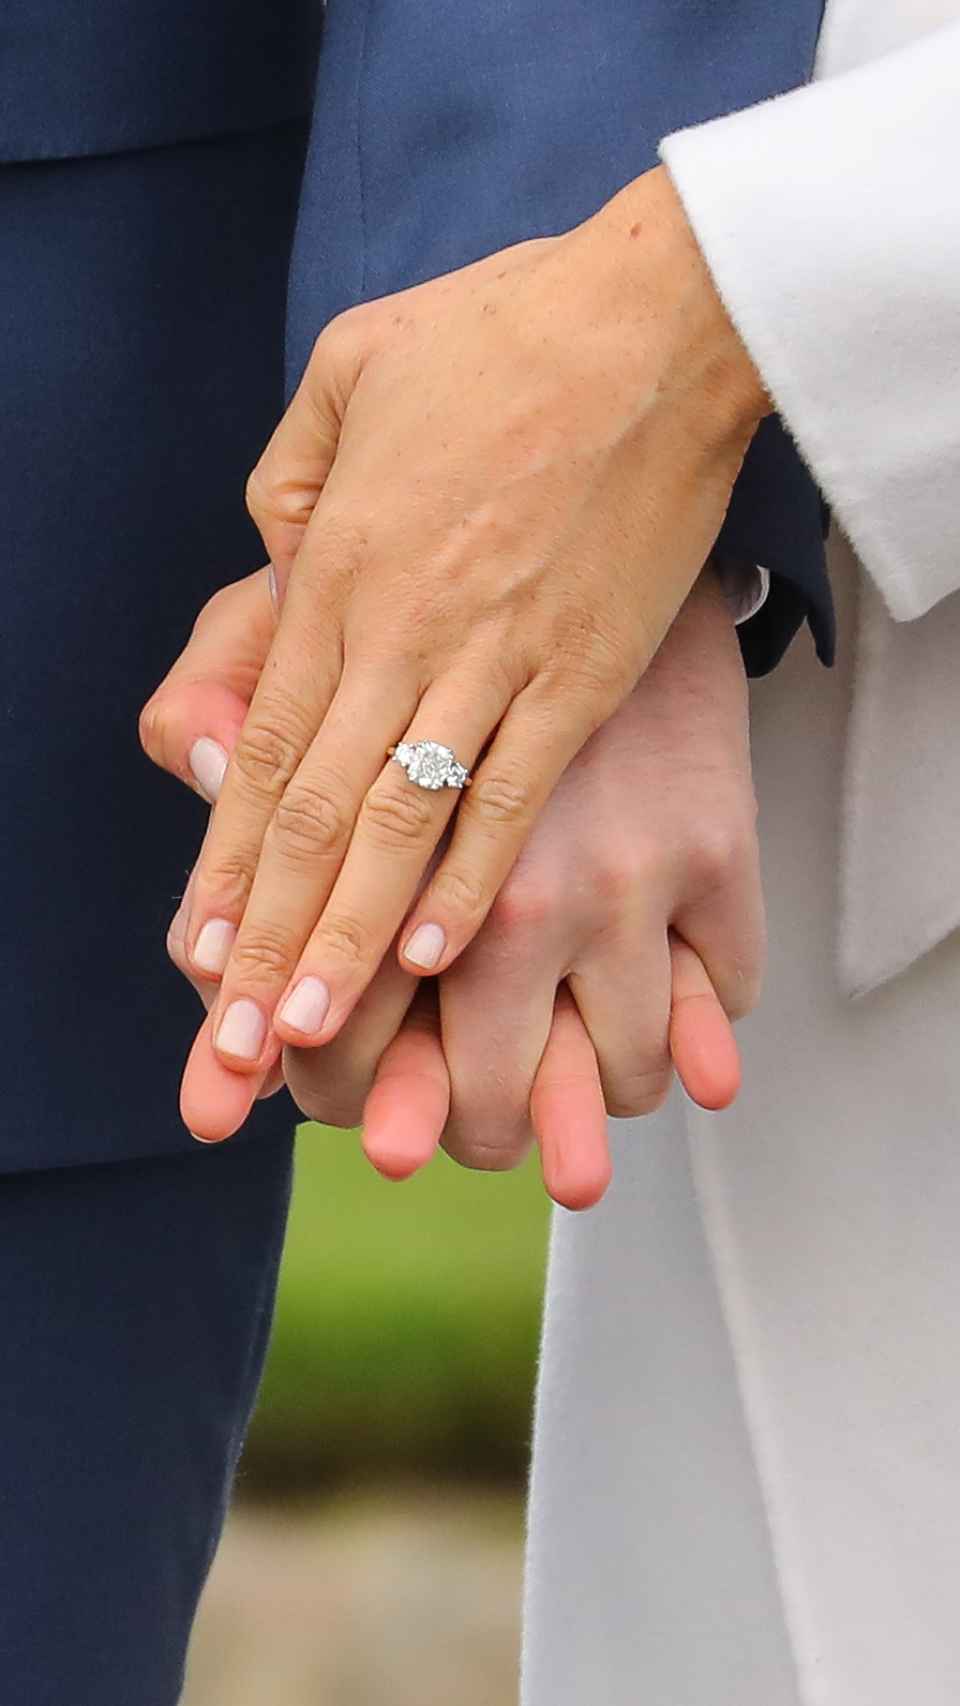 El anillo de pedida de la pareja.